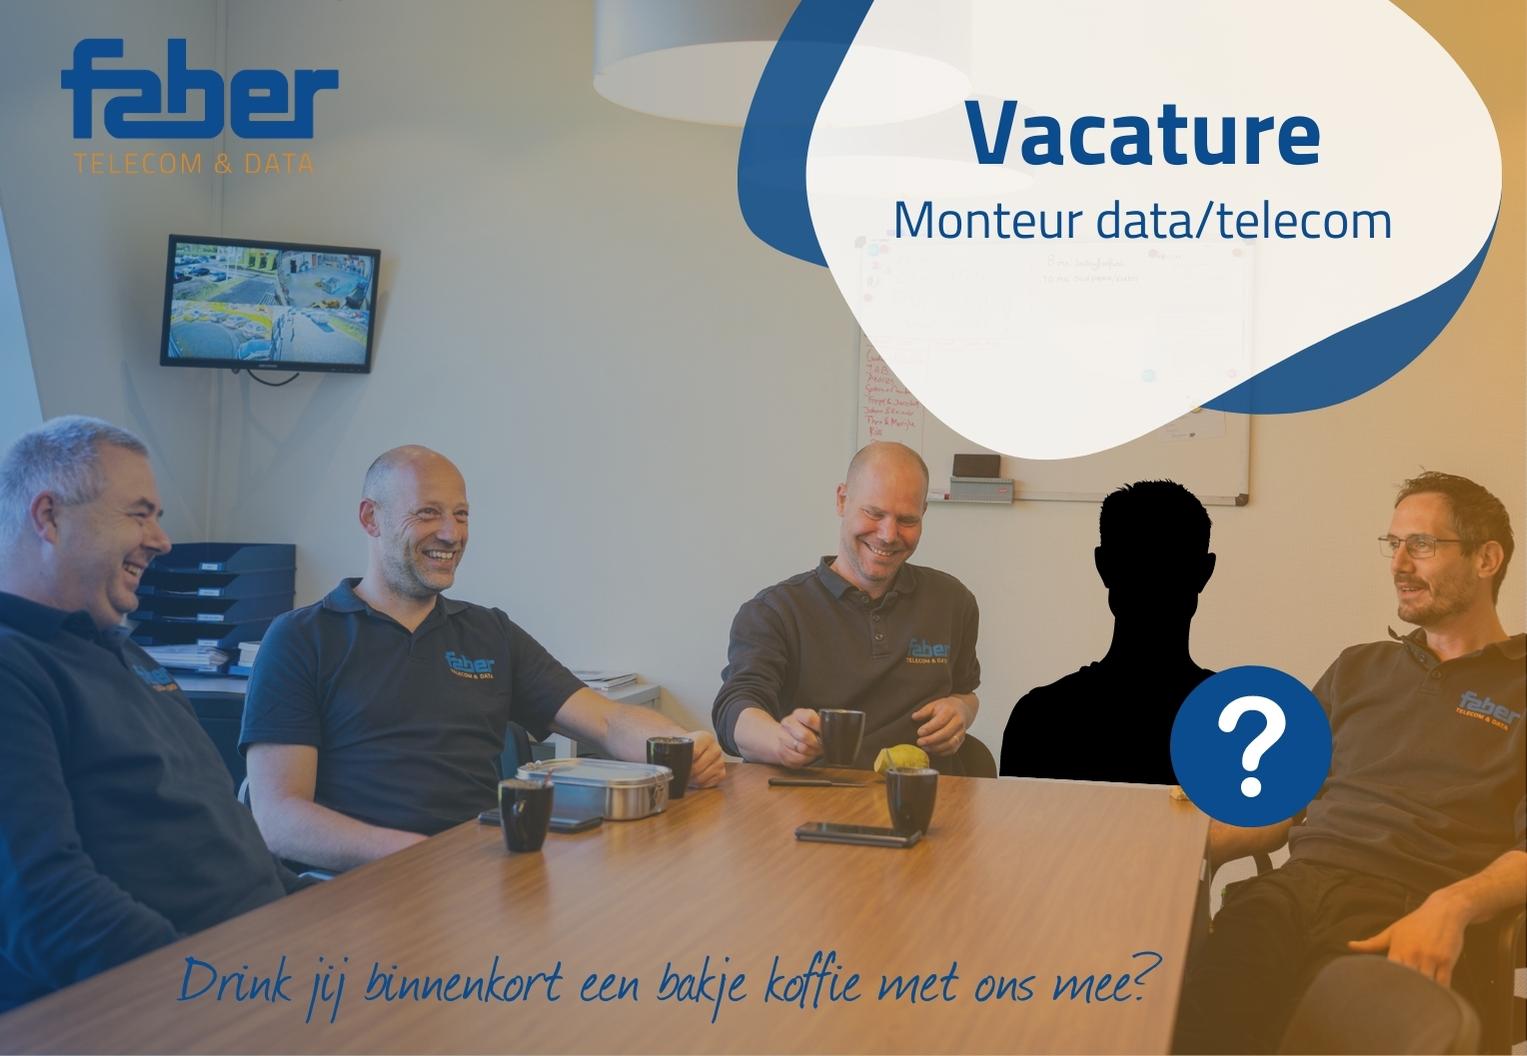 Vacature Monteur data / telecom